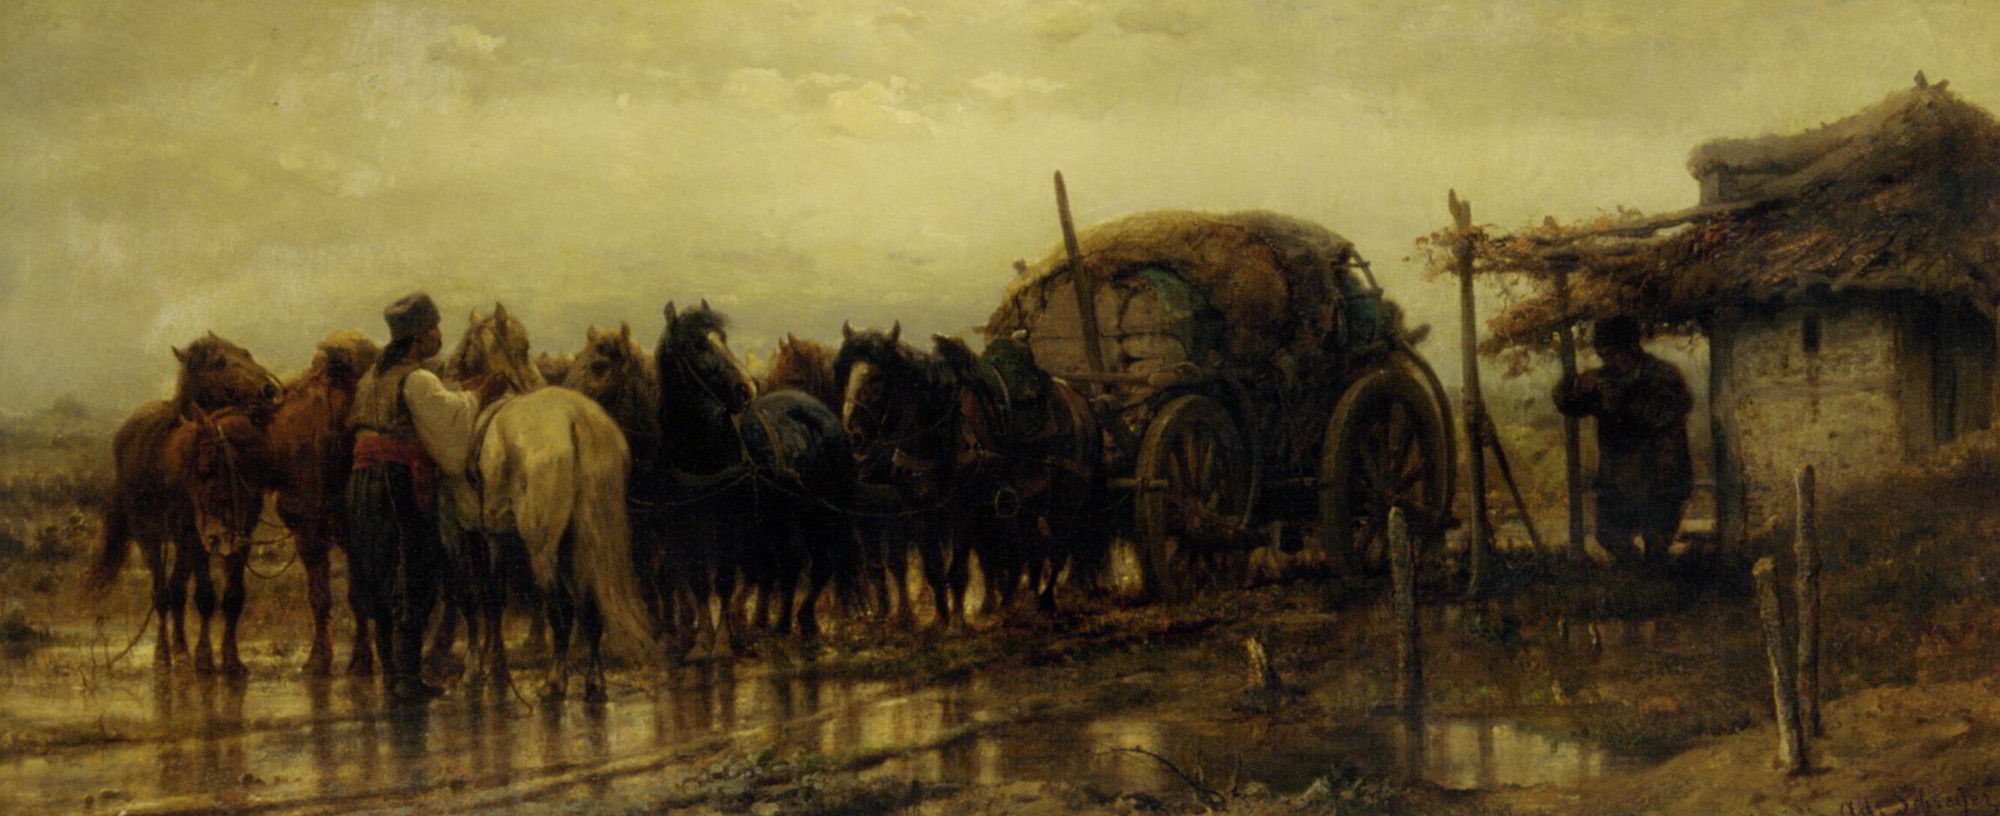 Hitching Horses by Adolf Schreyer